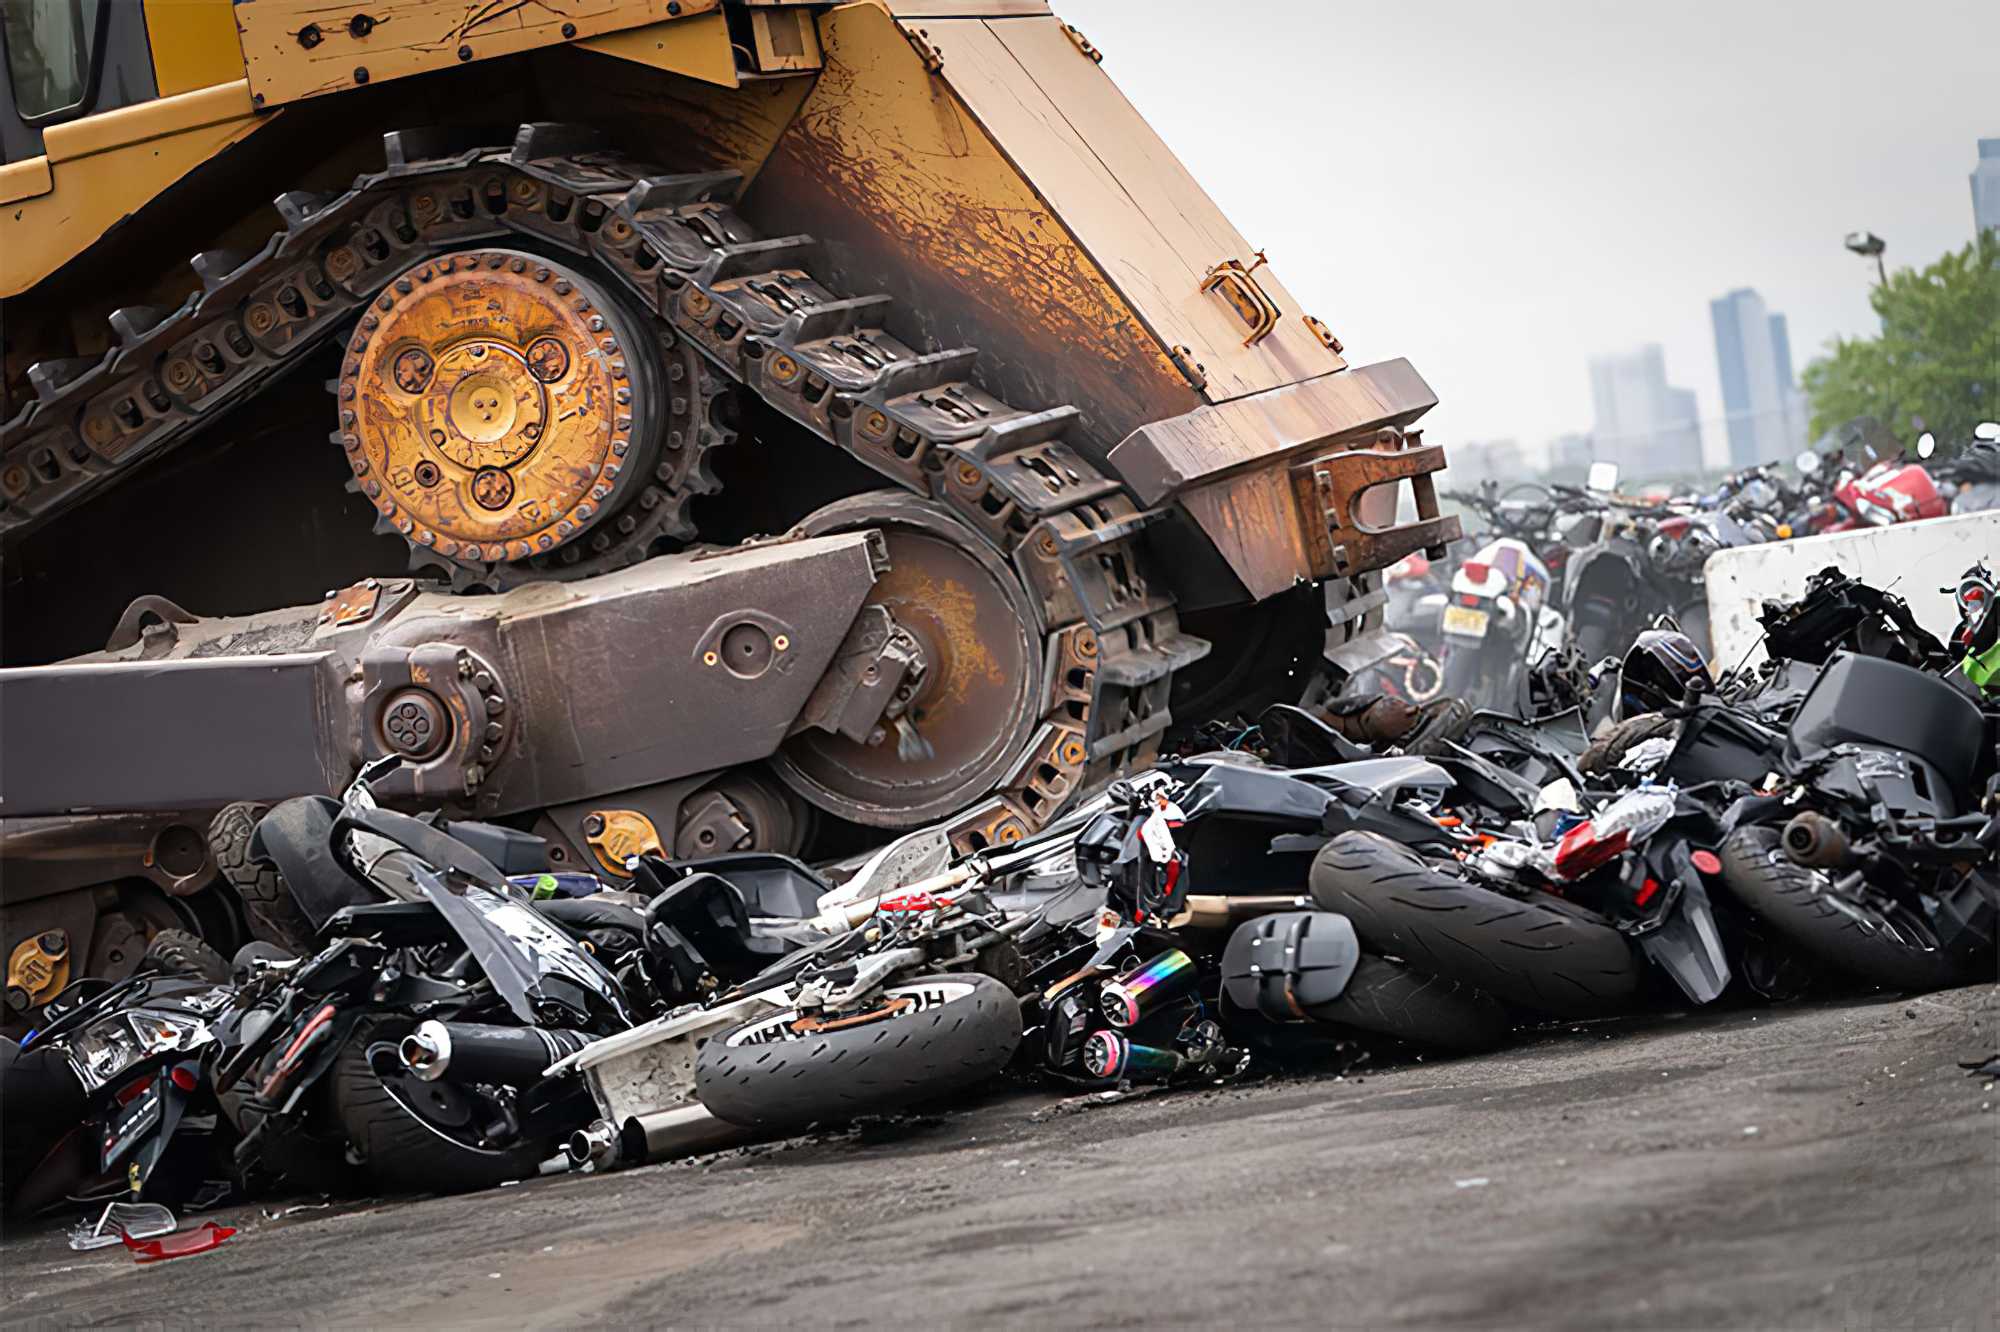 New York scraps bikes - MOTORCYCLES.NEWS